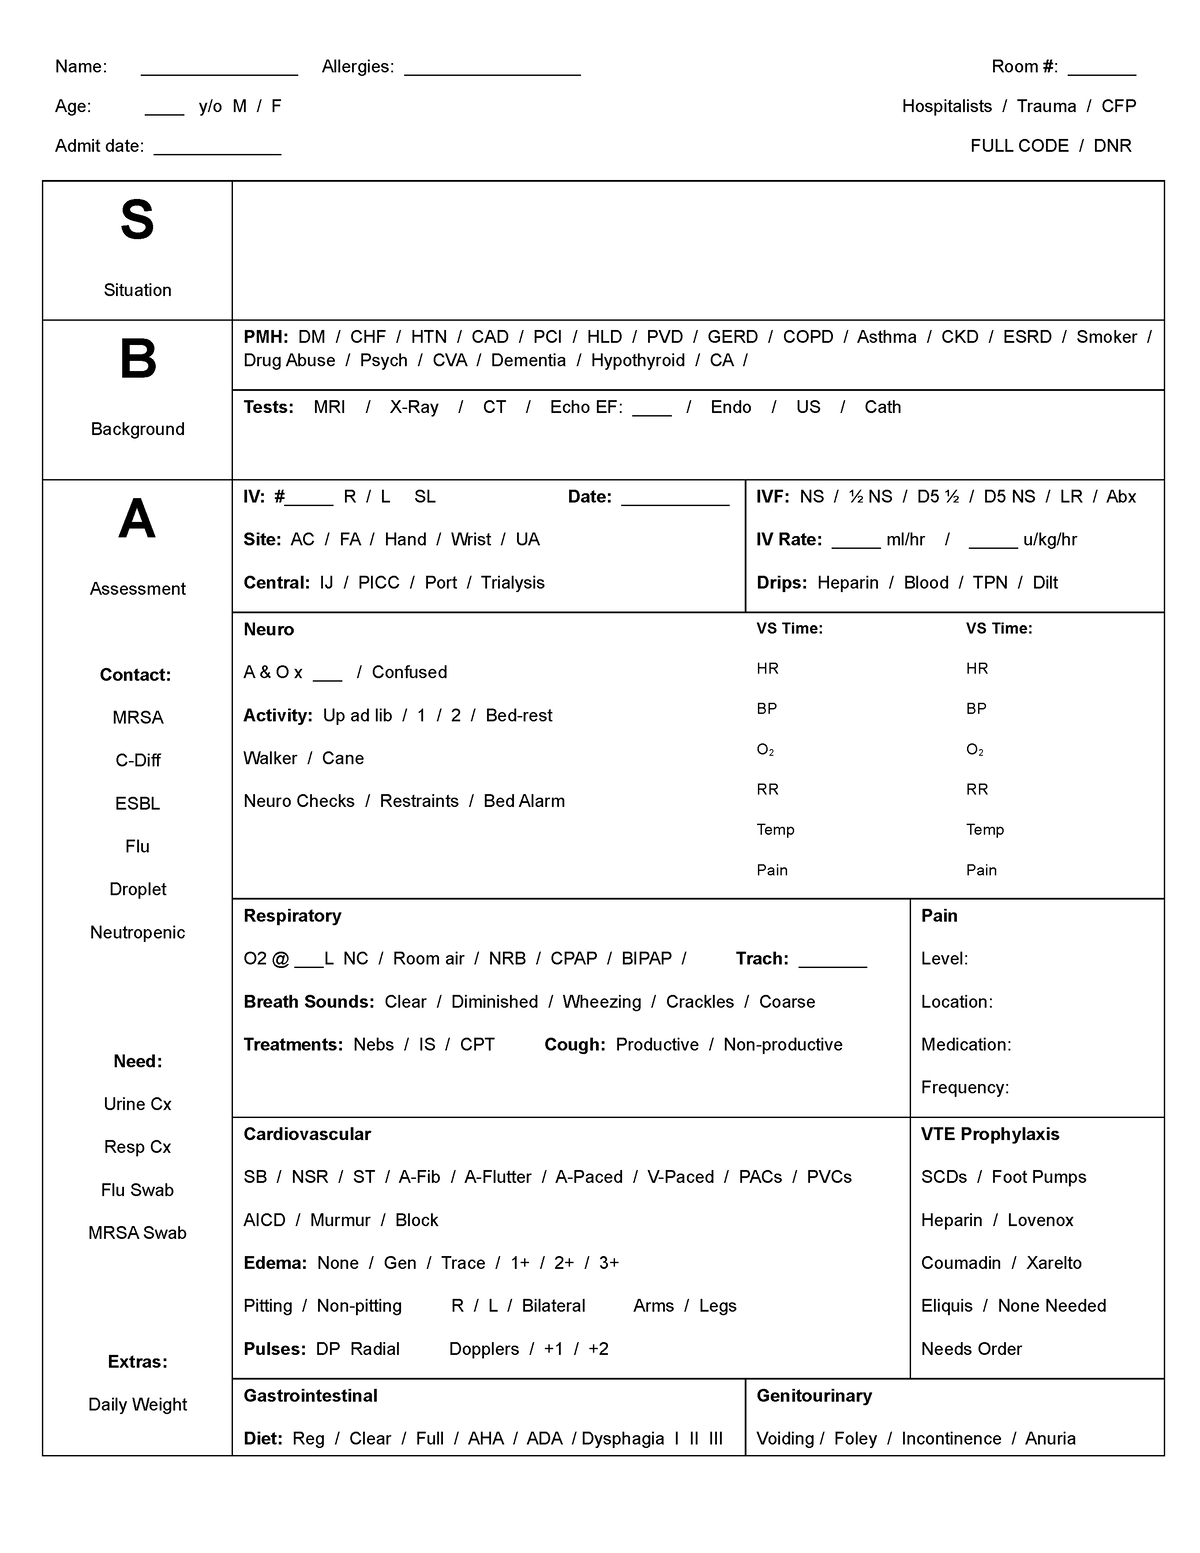 SBAR report Sheet revised - Name: ________________ Allergies ...